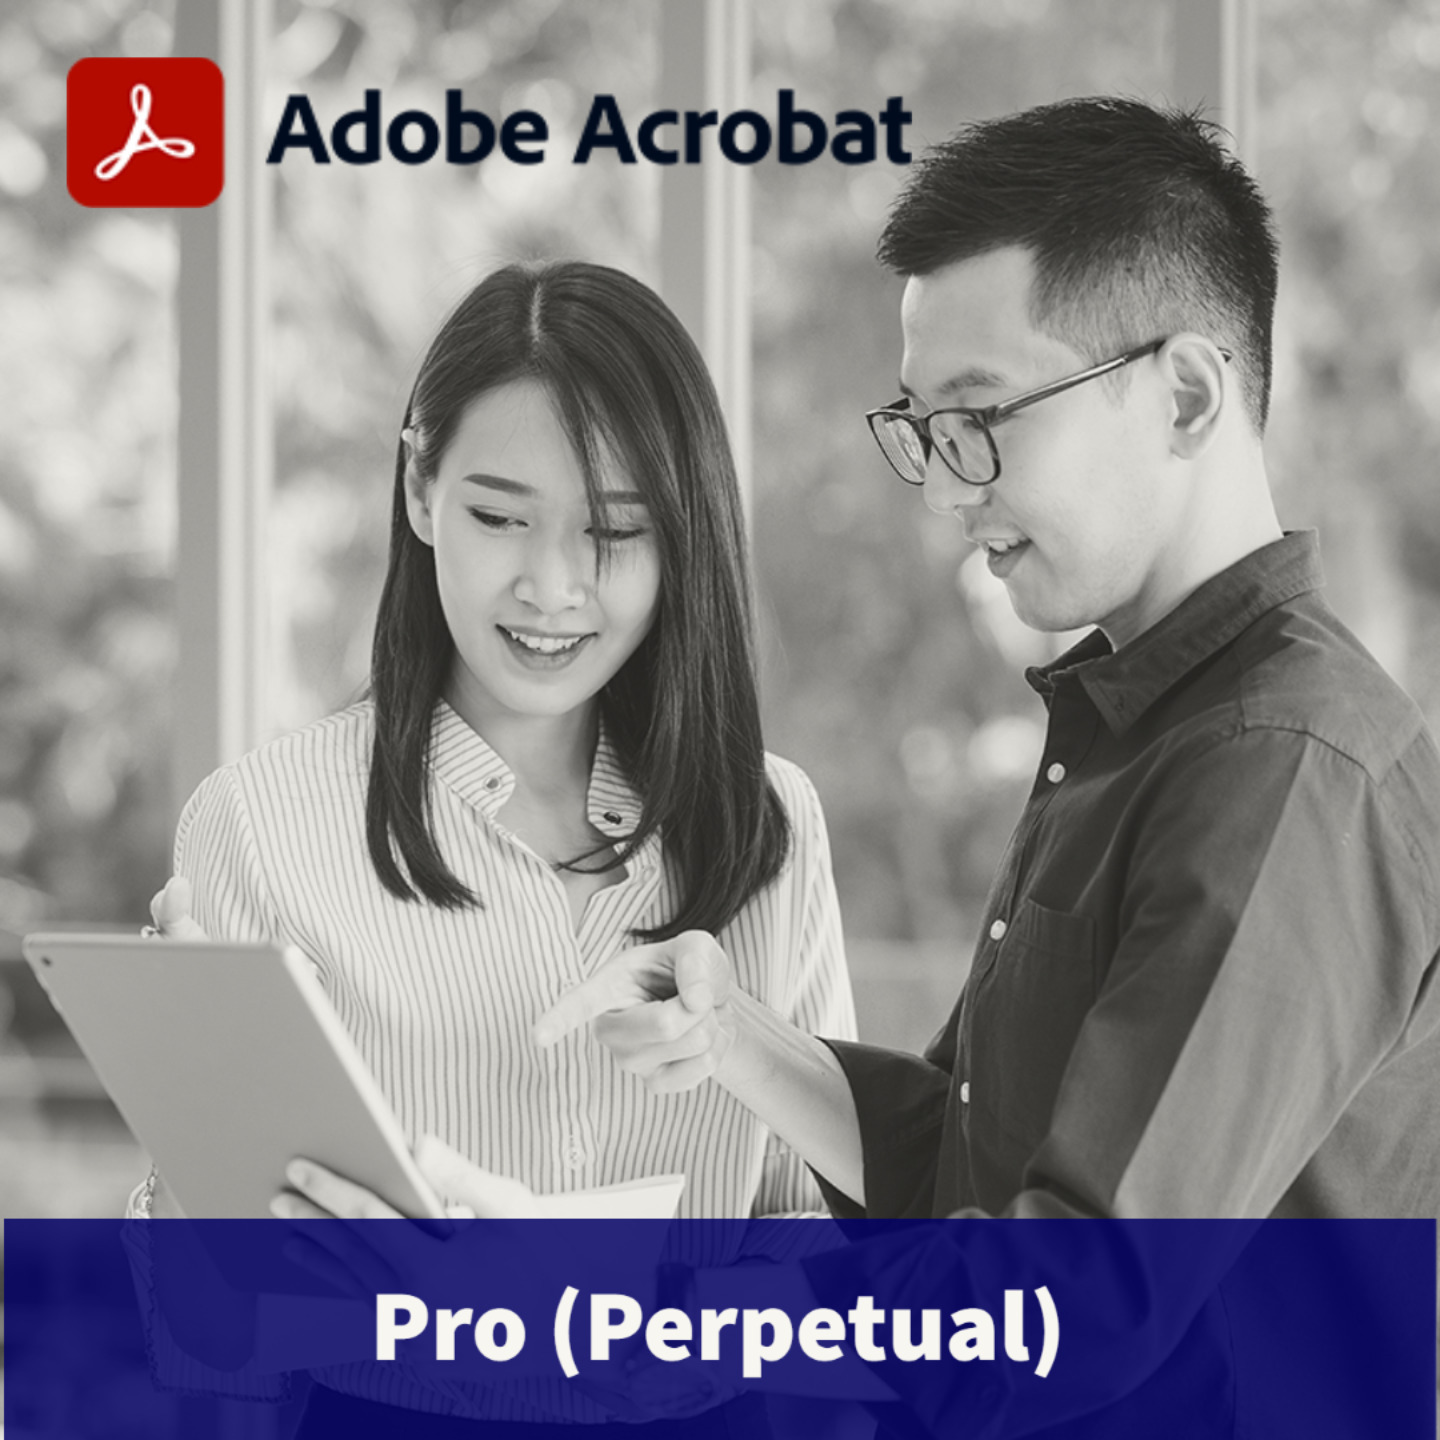 Adobe Acrobat Pro (Perpetual)